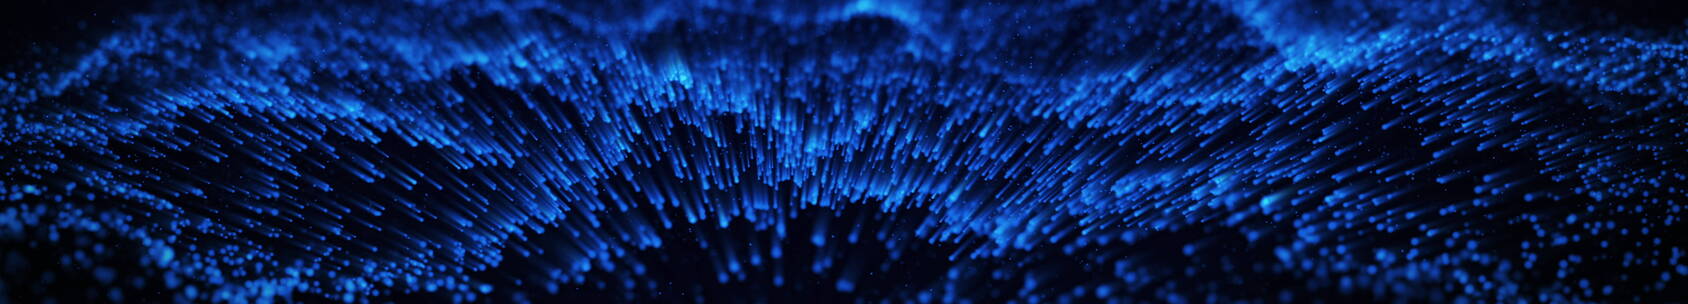 4k科技感蓝色粒子大屏背景素材